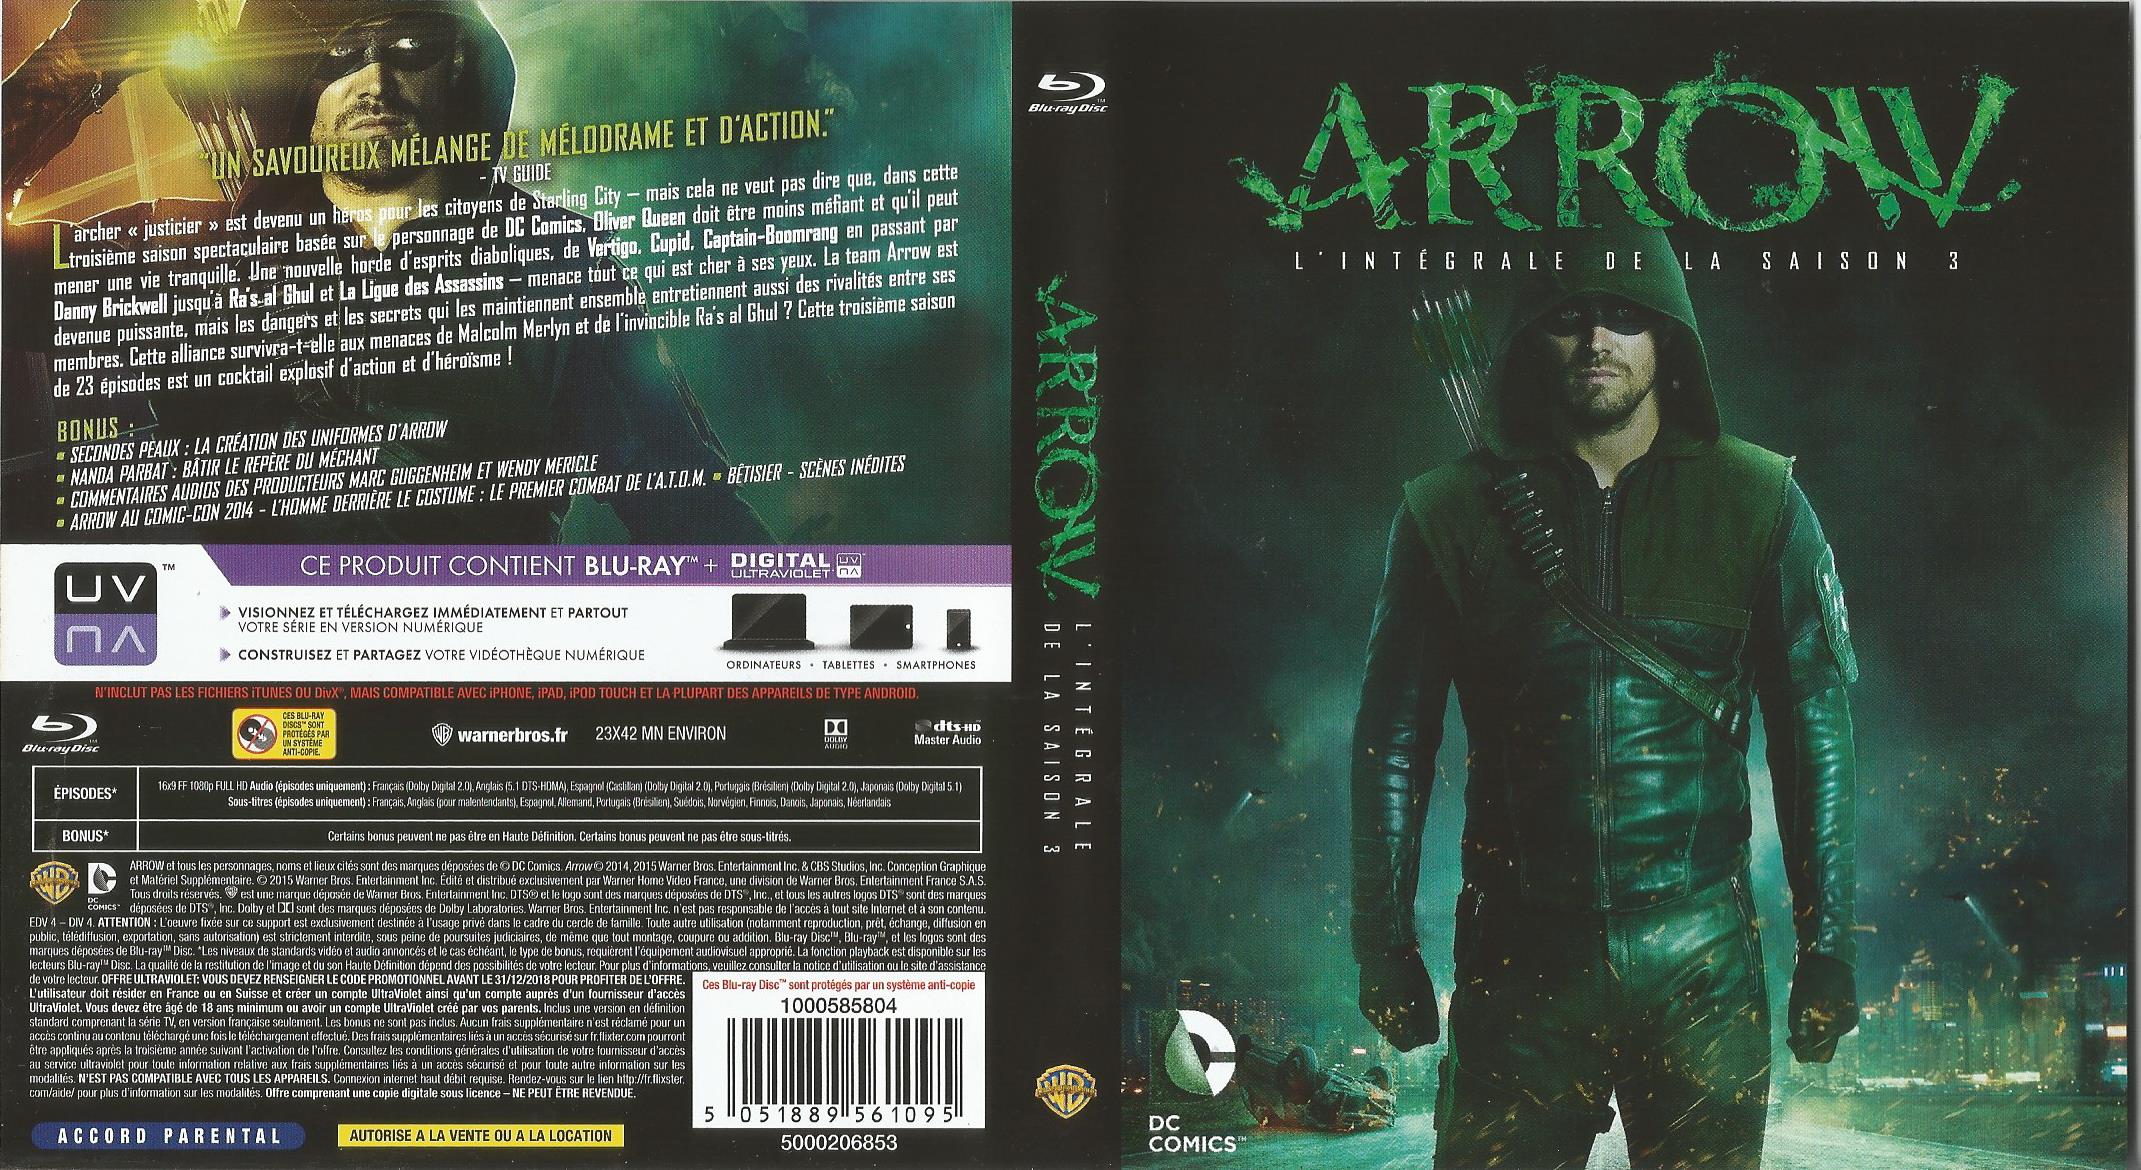 Jaquette DVD Arrow saison 3 (BLU-RAY)